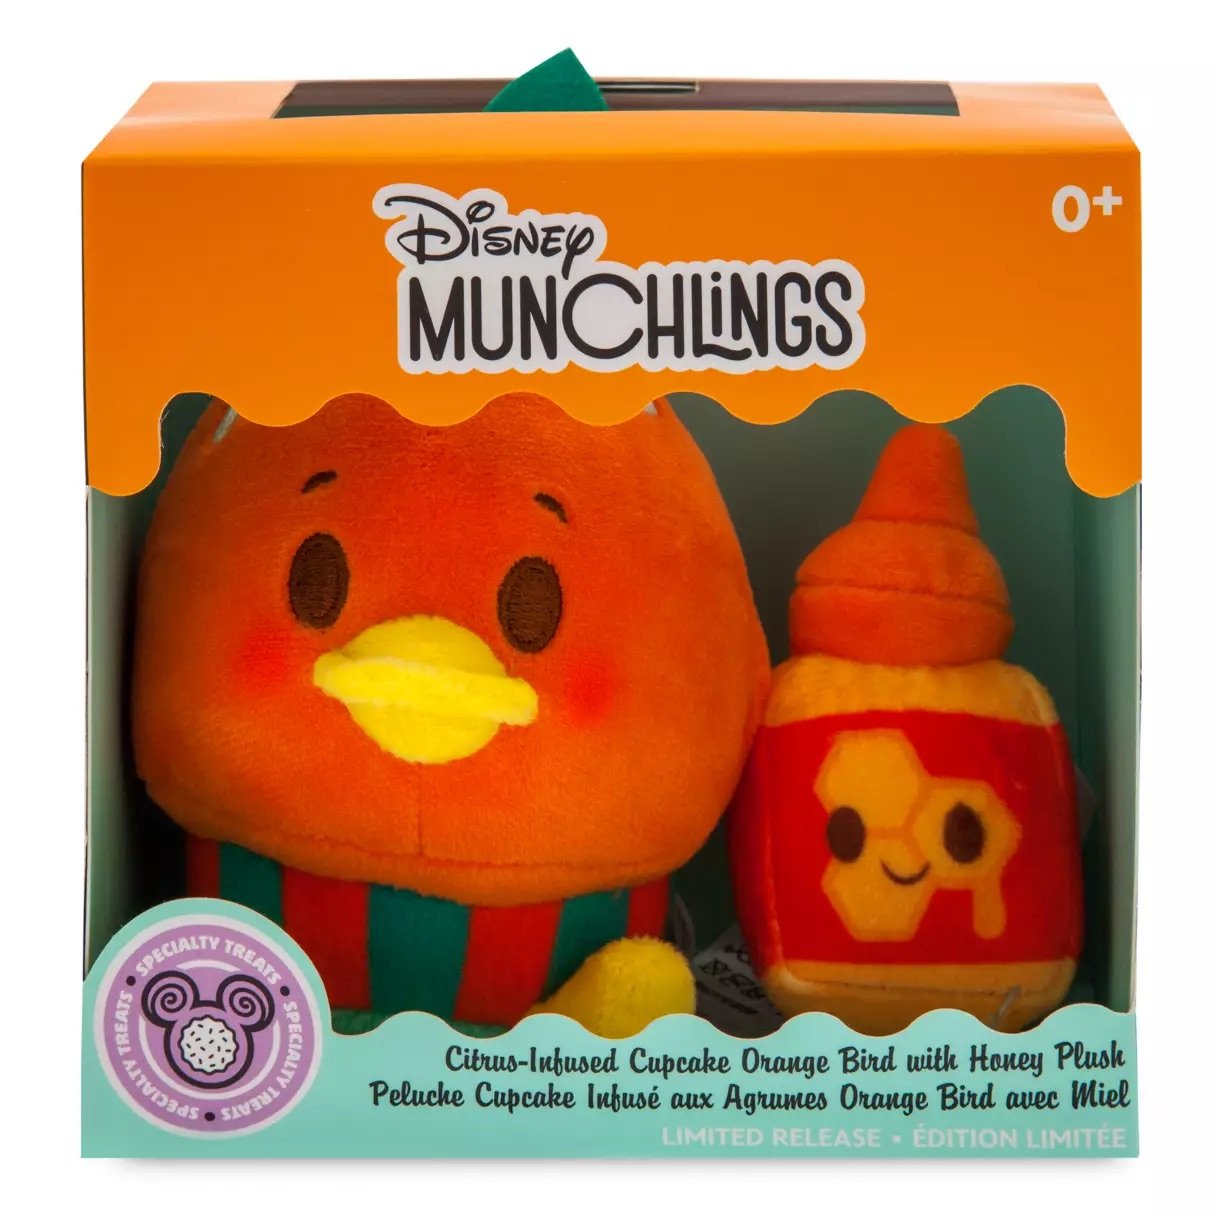 Orange Bird Citrus-Infused Cupcake Disney Munchlings